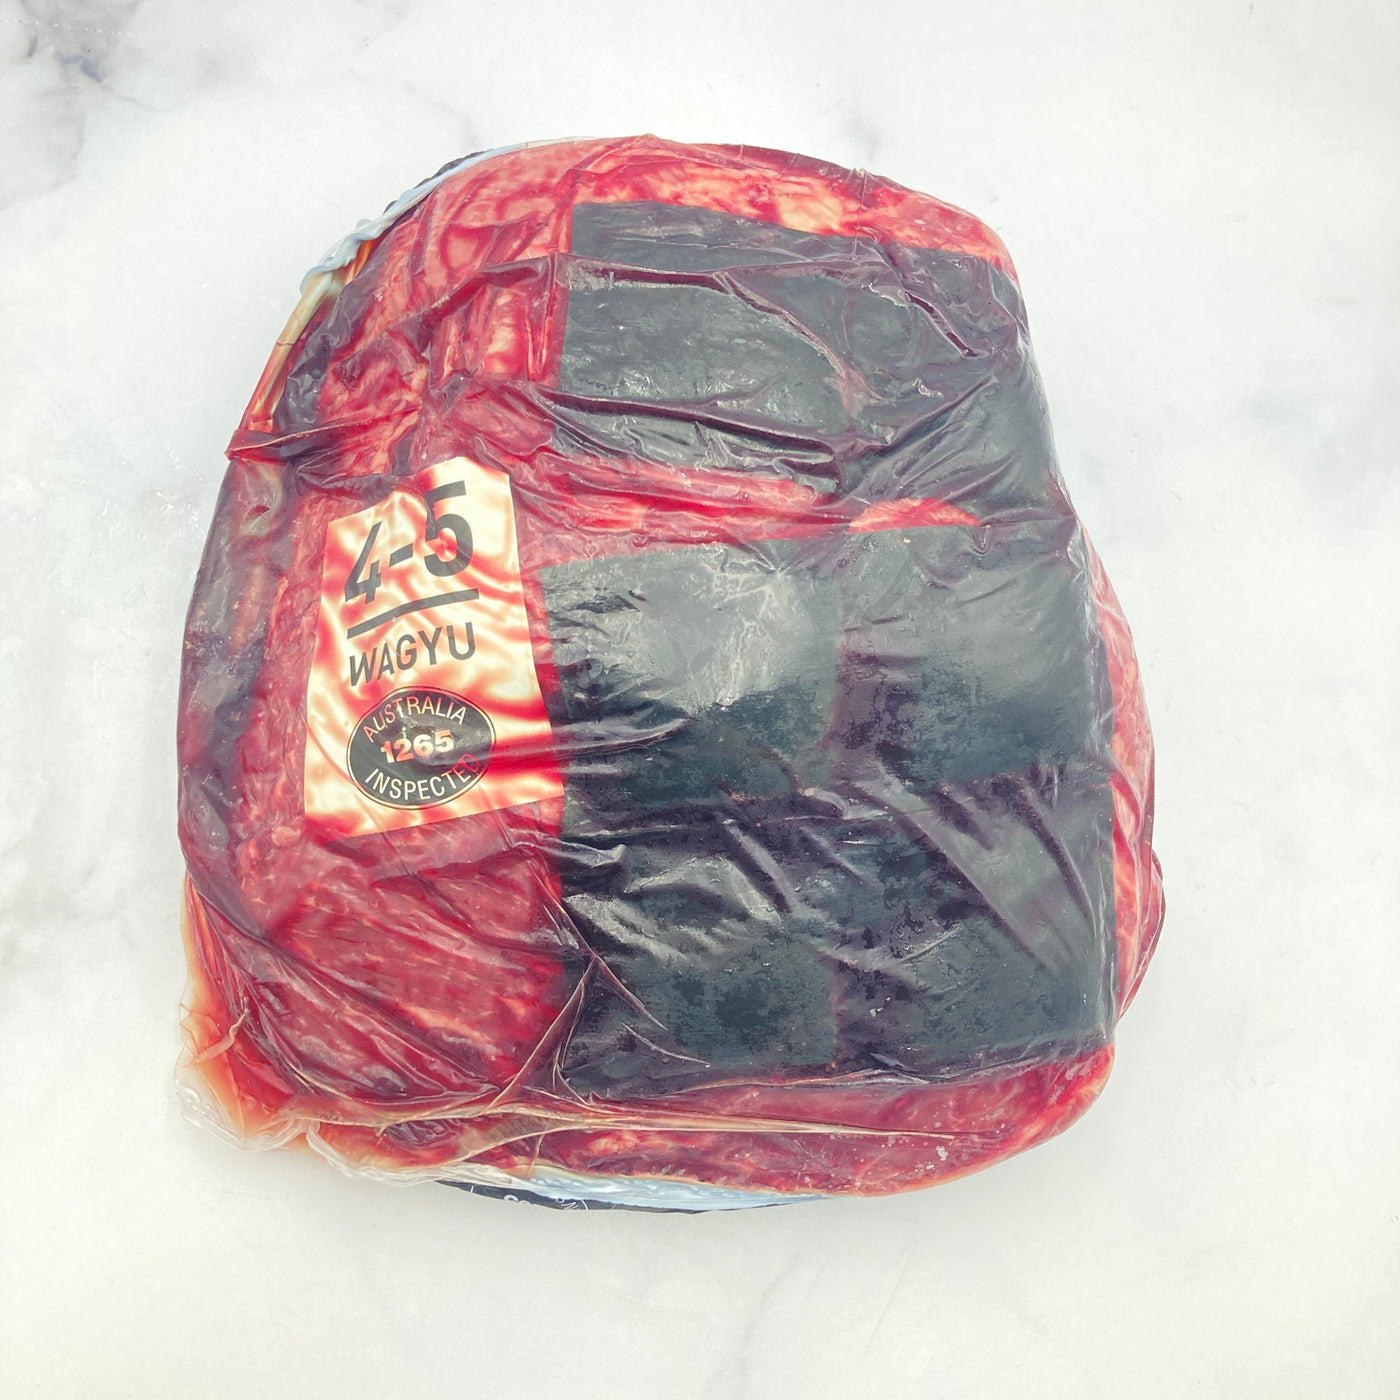 Black Opal Wagyu Beef Heart Smart Rump MB 4-5 | $43.99kg